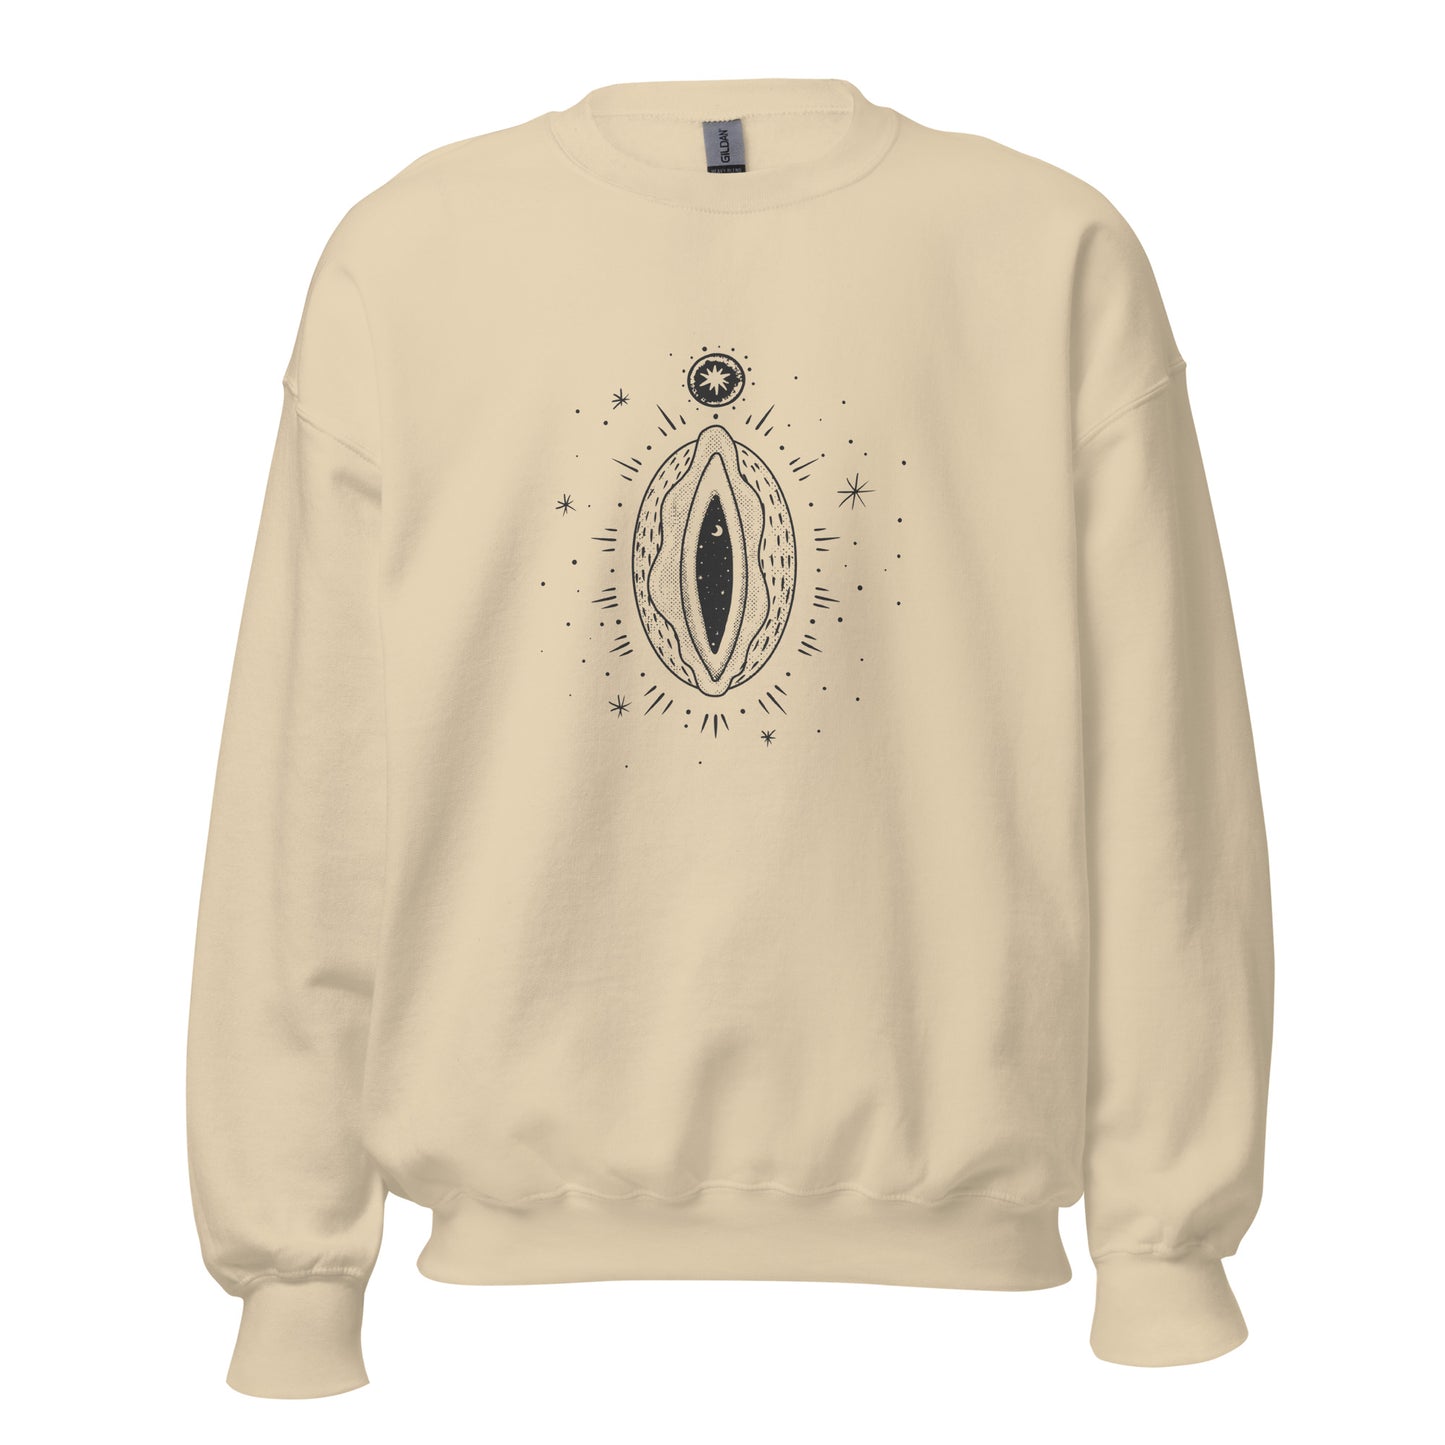 Space Vulva Unisex Sweatshirt